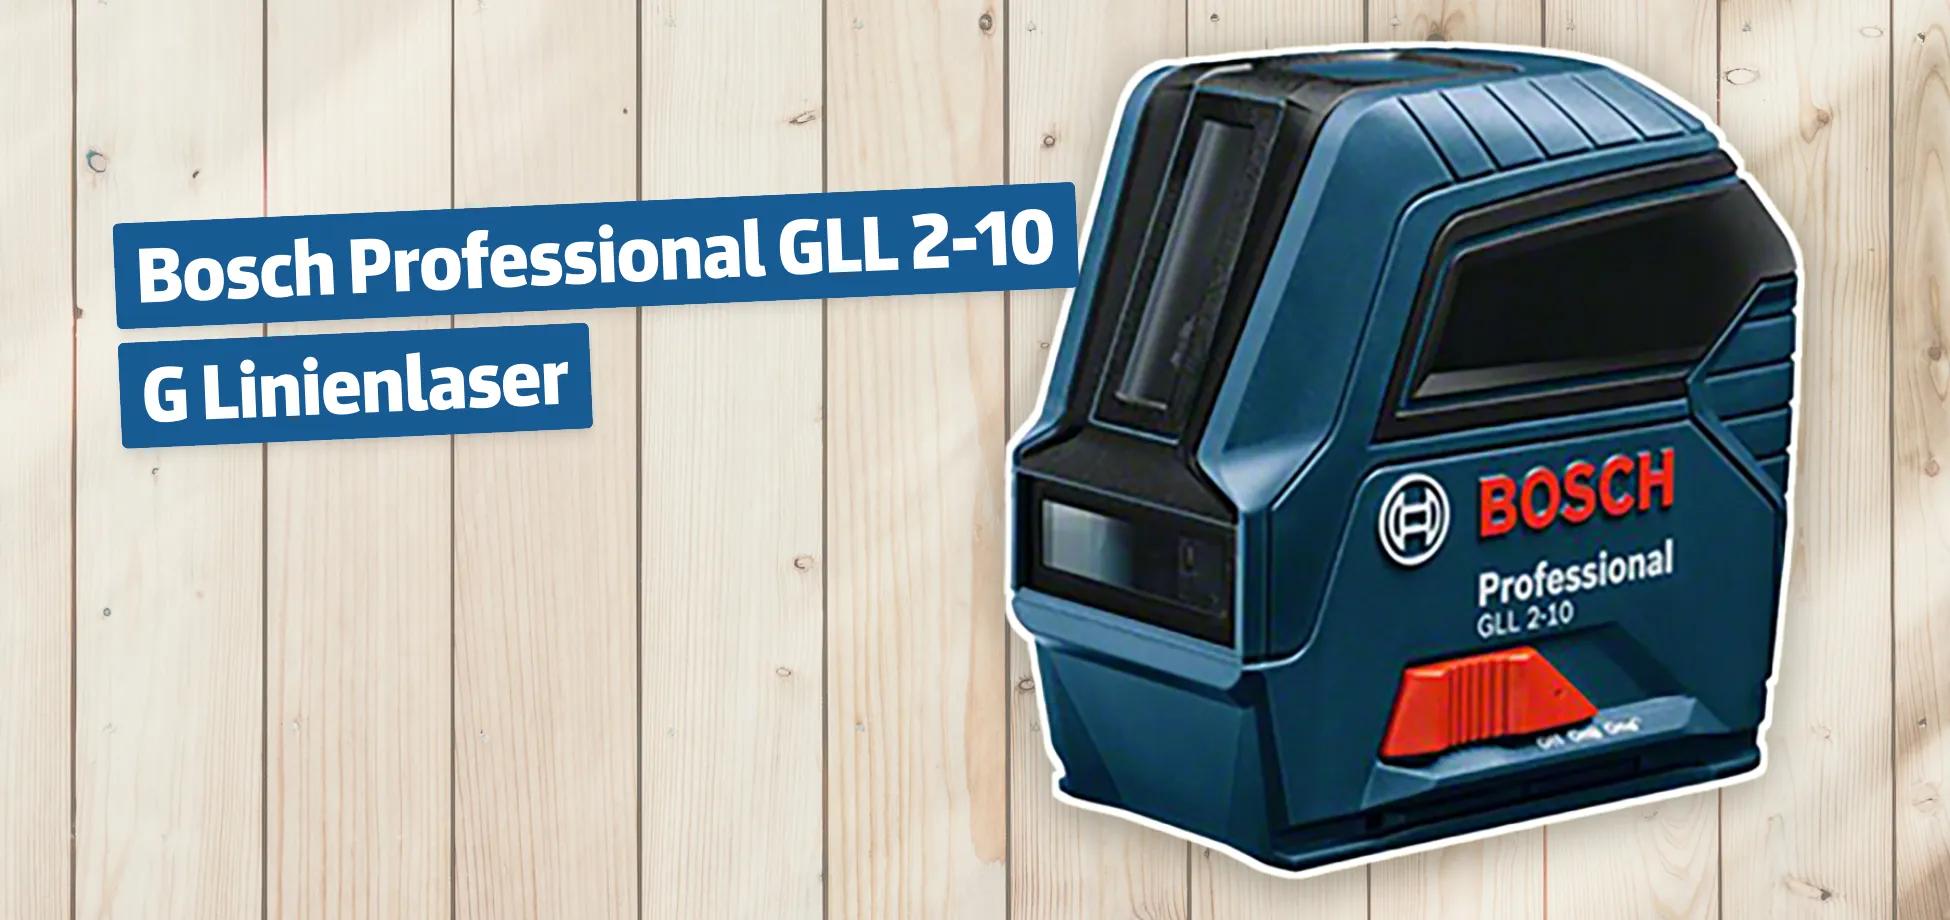 Bosch Professional GLL 2-10 G Linienlaser